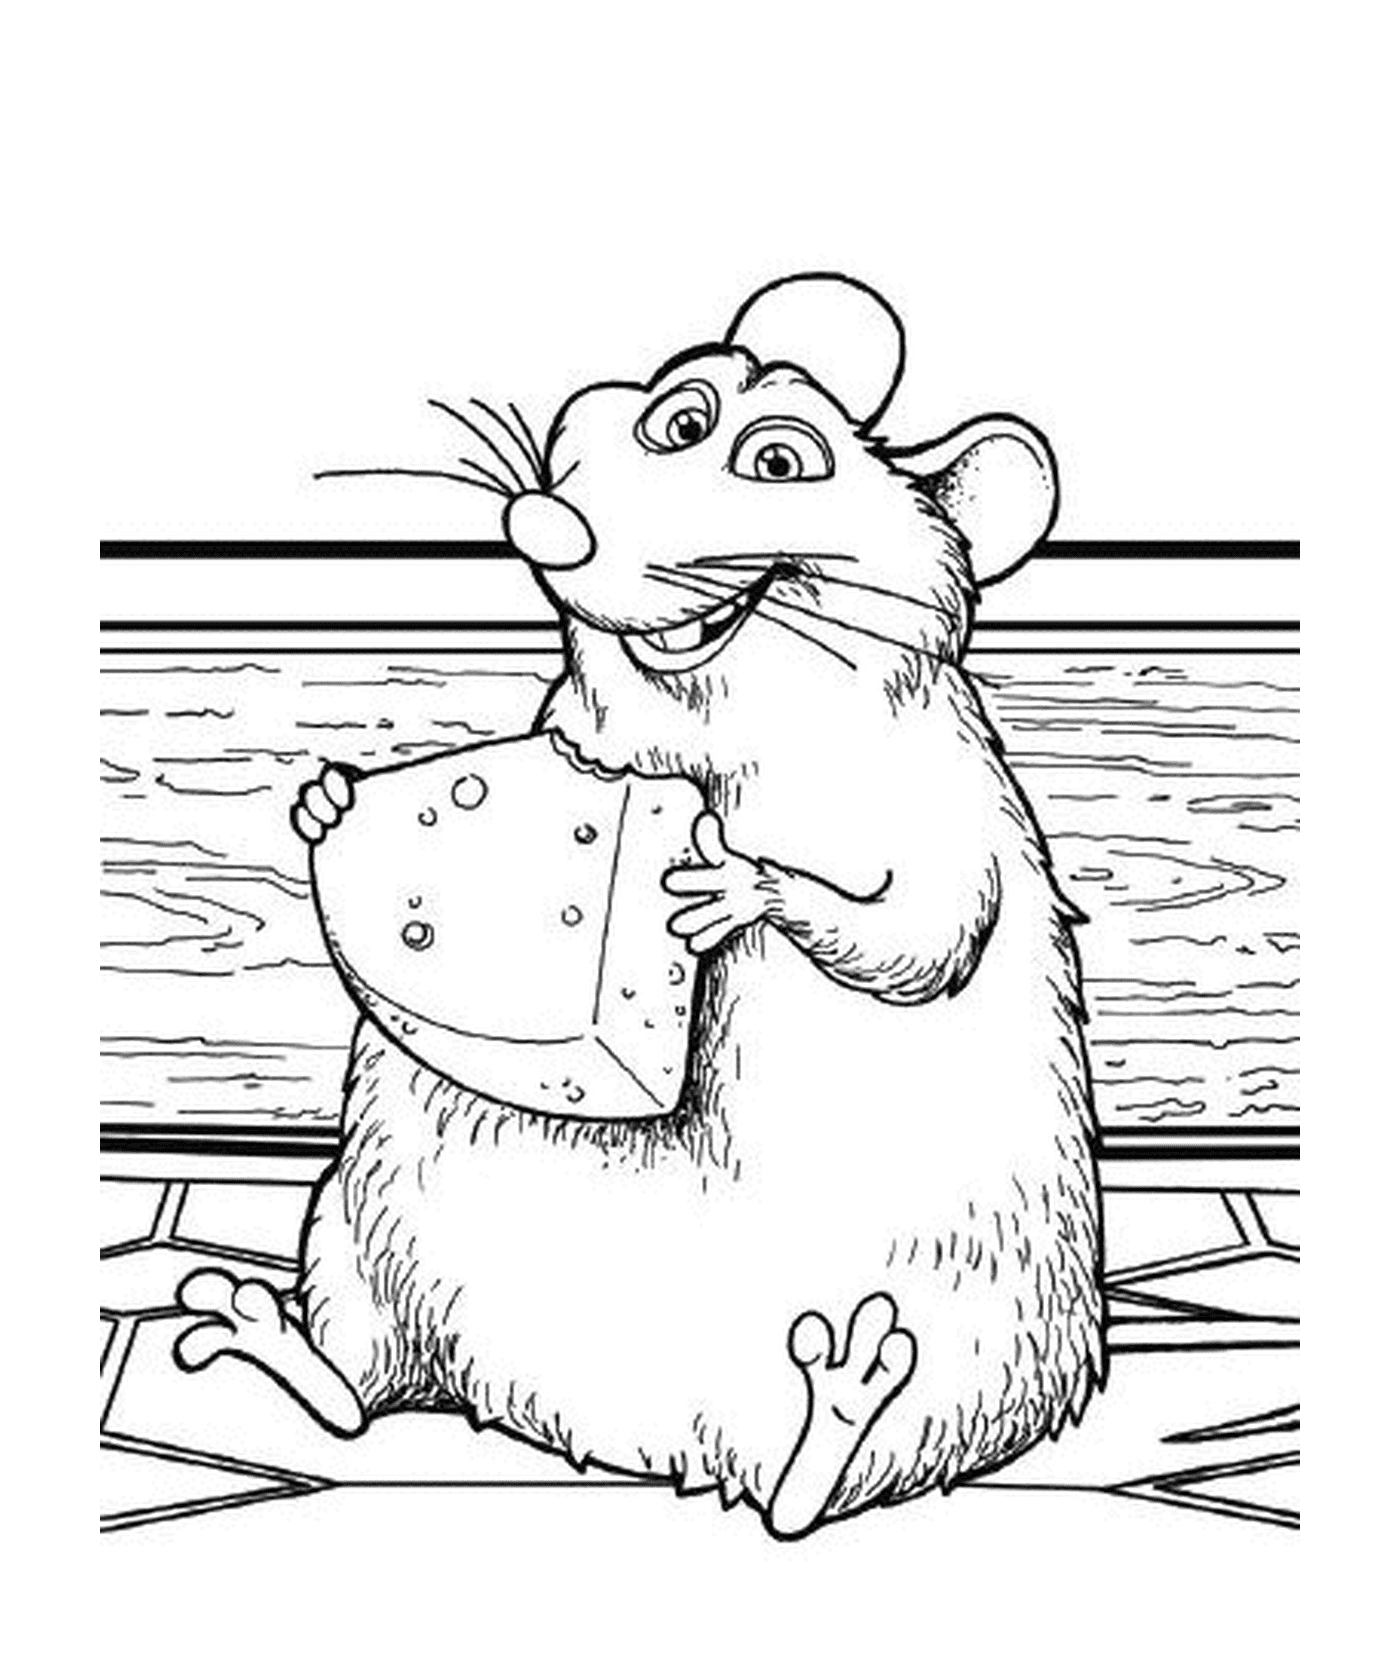  Рататуй: мышь, держащая сыр во рту 